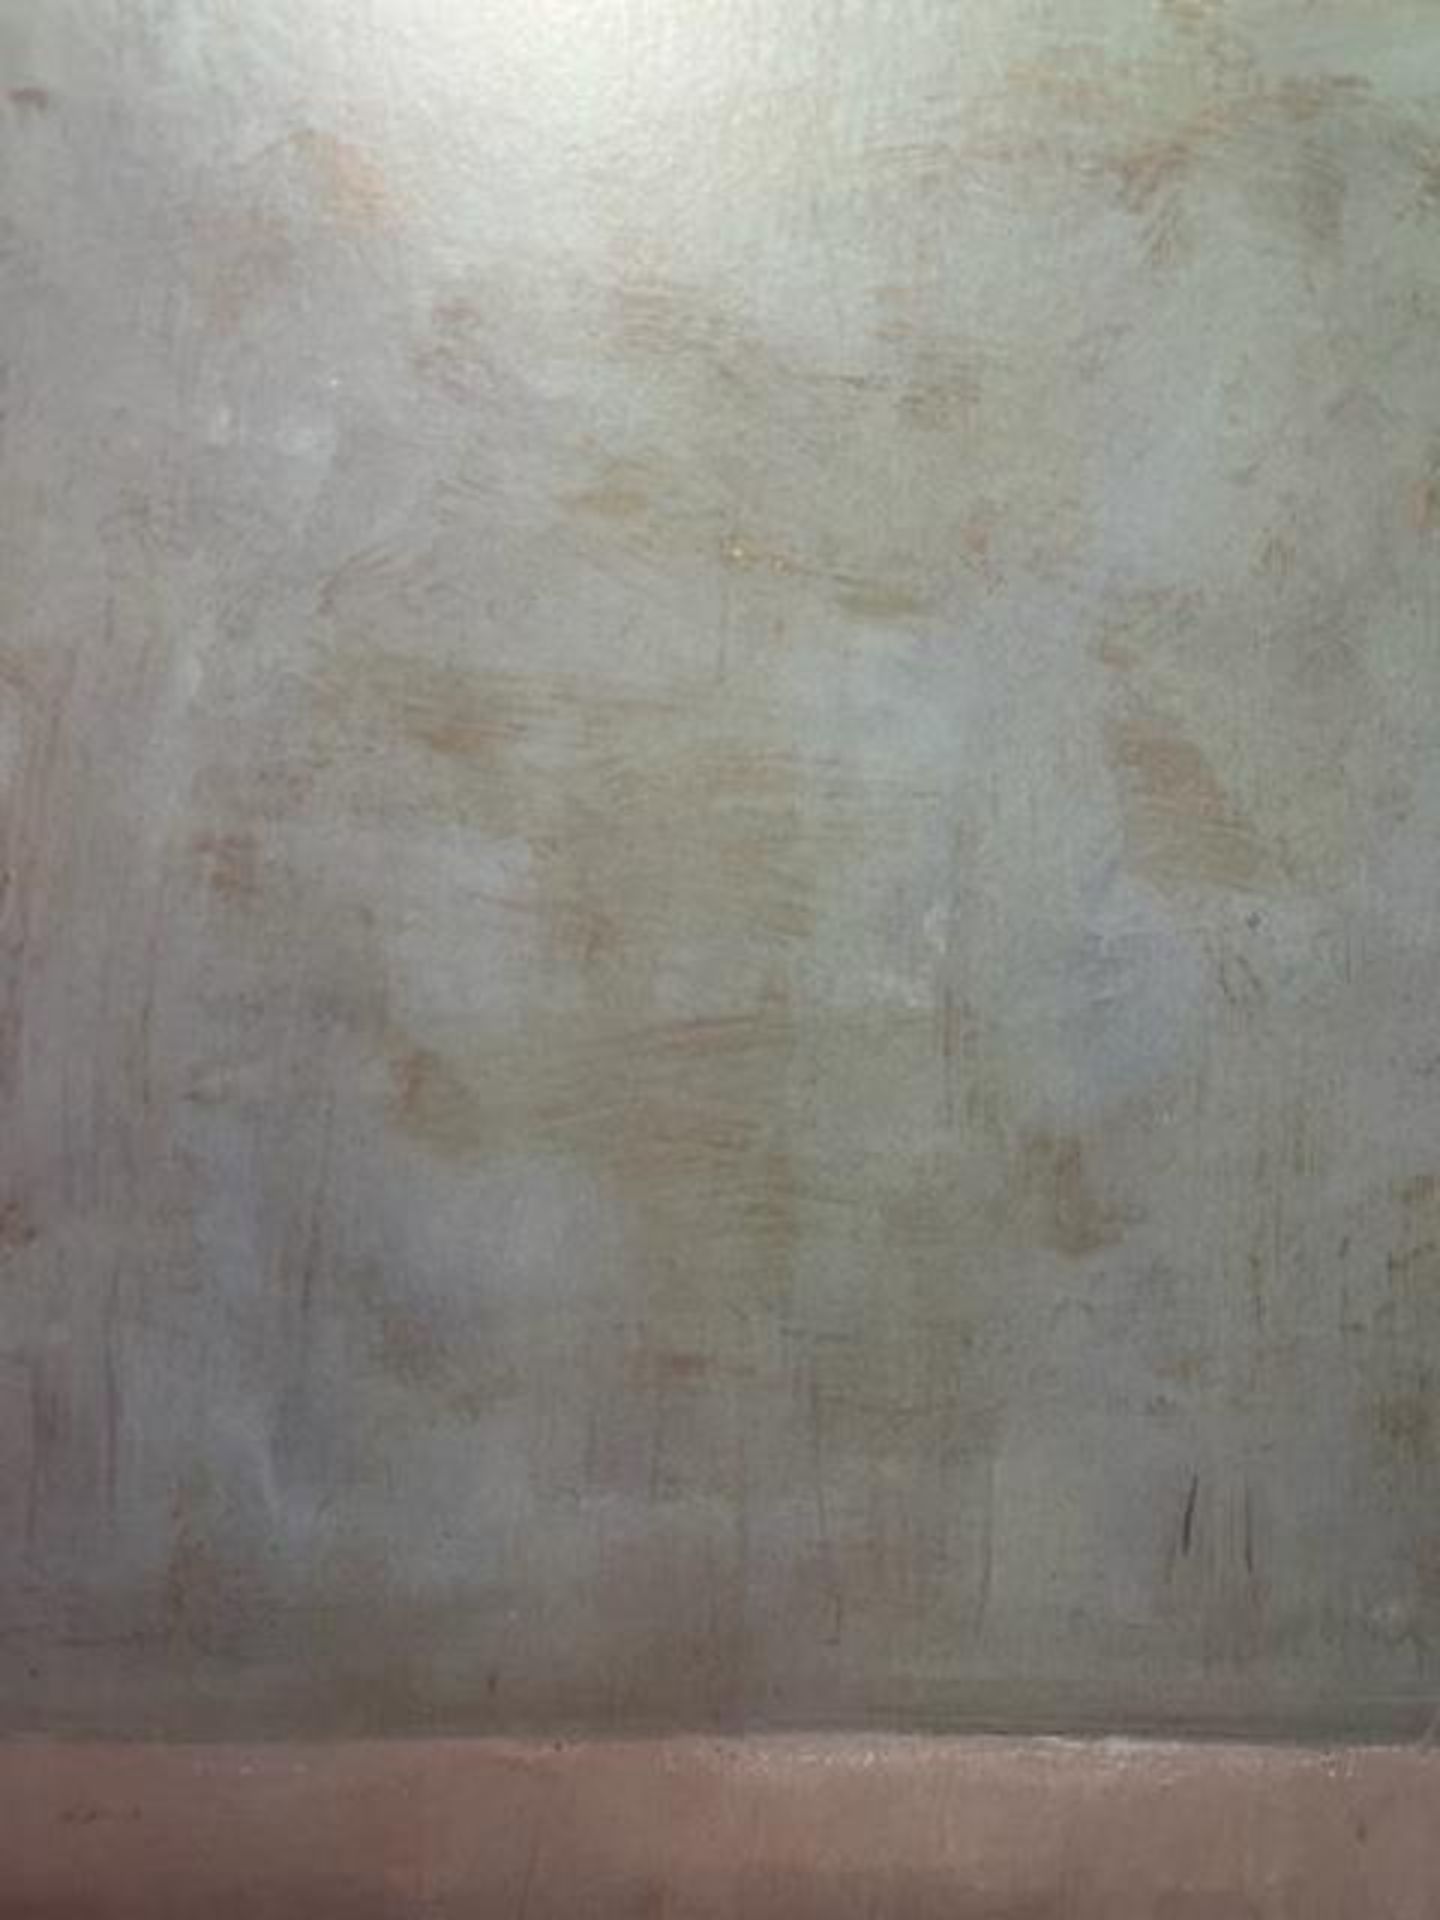 Mark Rothko "Untitled" Print. - Image 3 of 6